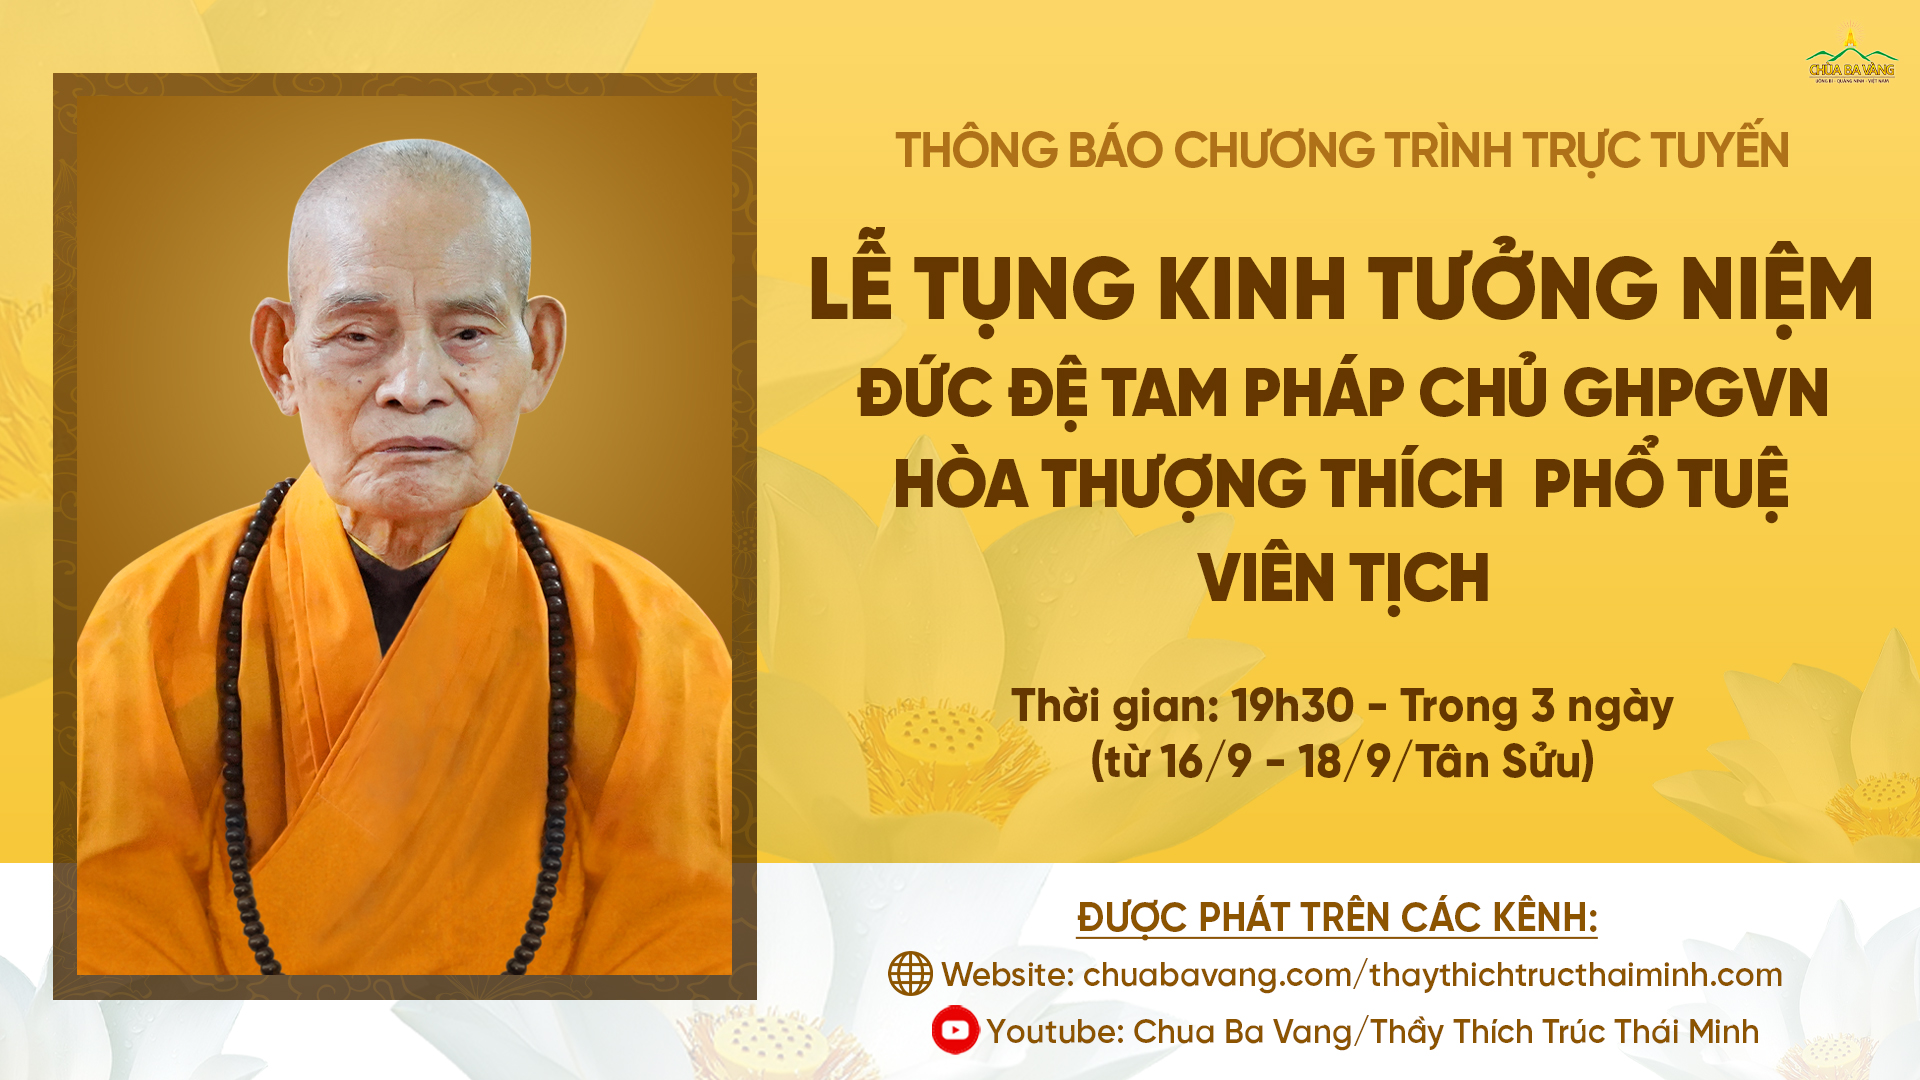 thong-bao-chuong-trinh-le-tung-kinh-tuong-niem-duc-de-tam-phap-chu-ghpgvn-hoa-thuong-thich-pho-tue-vien-tich